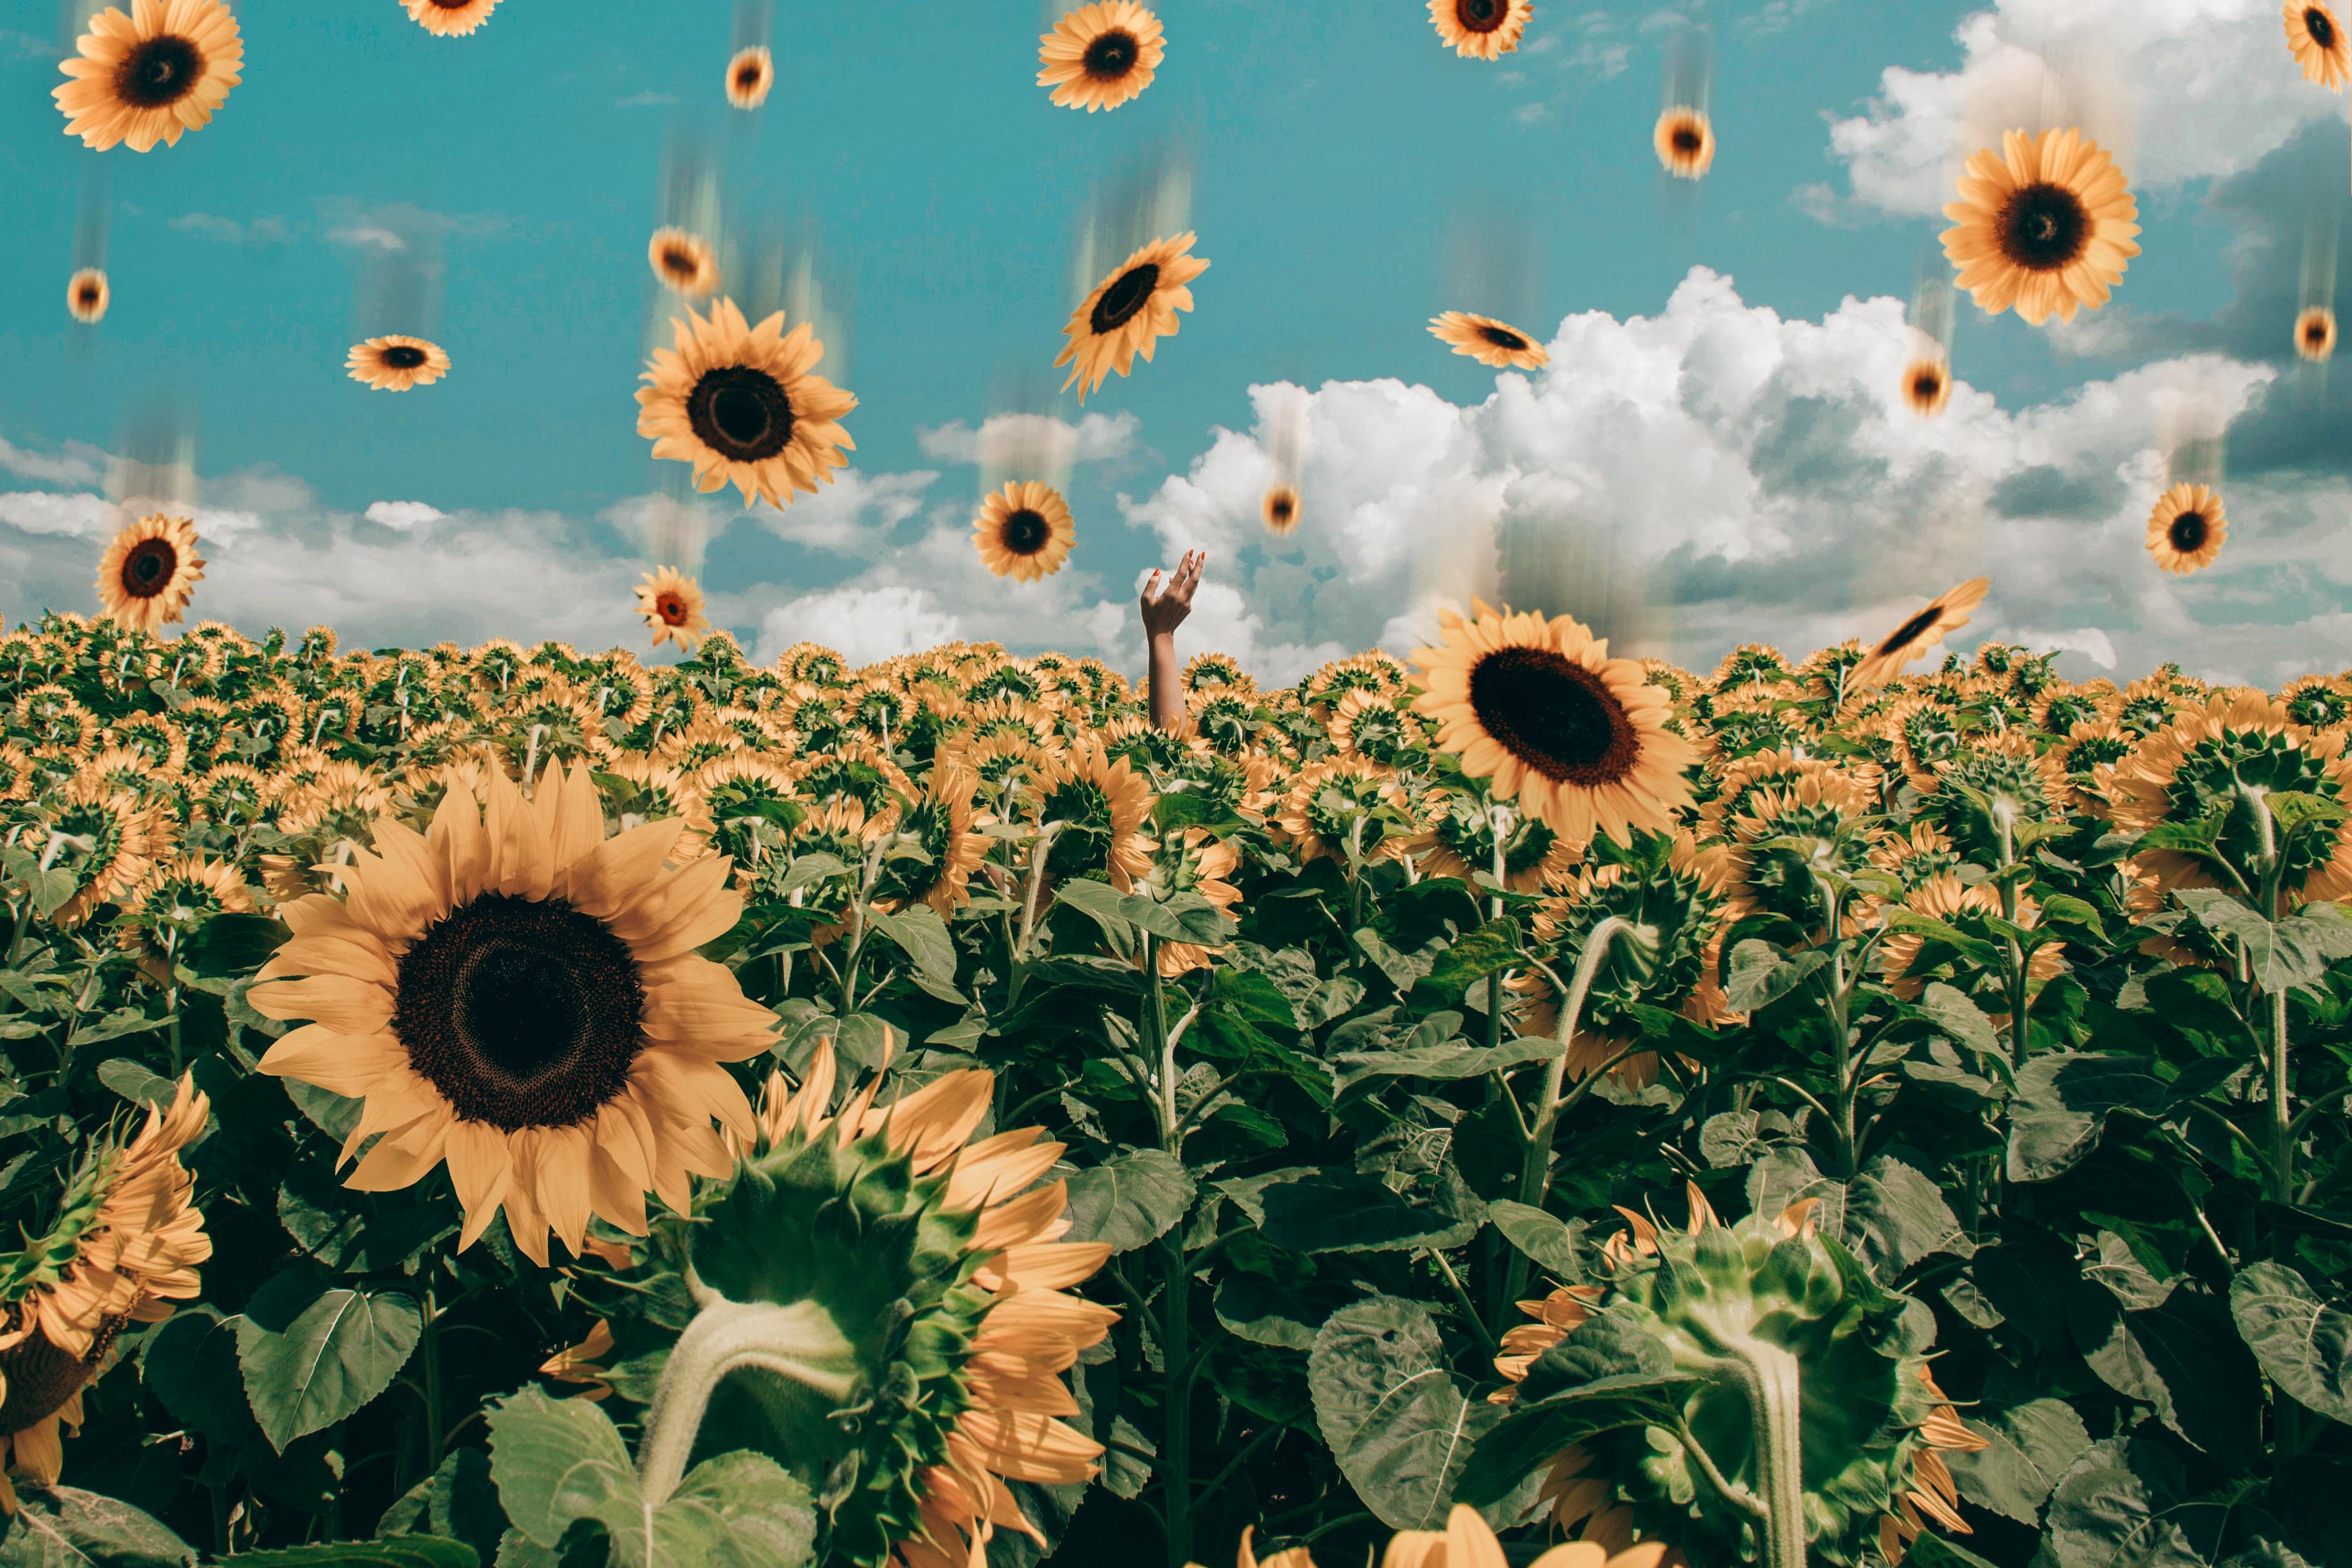 Sunflower Wallpaper Images  Free Download on Freepik